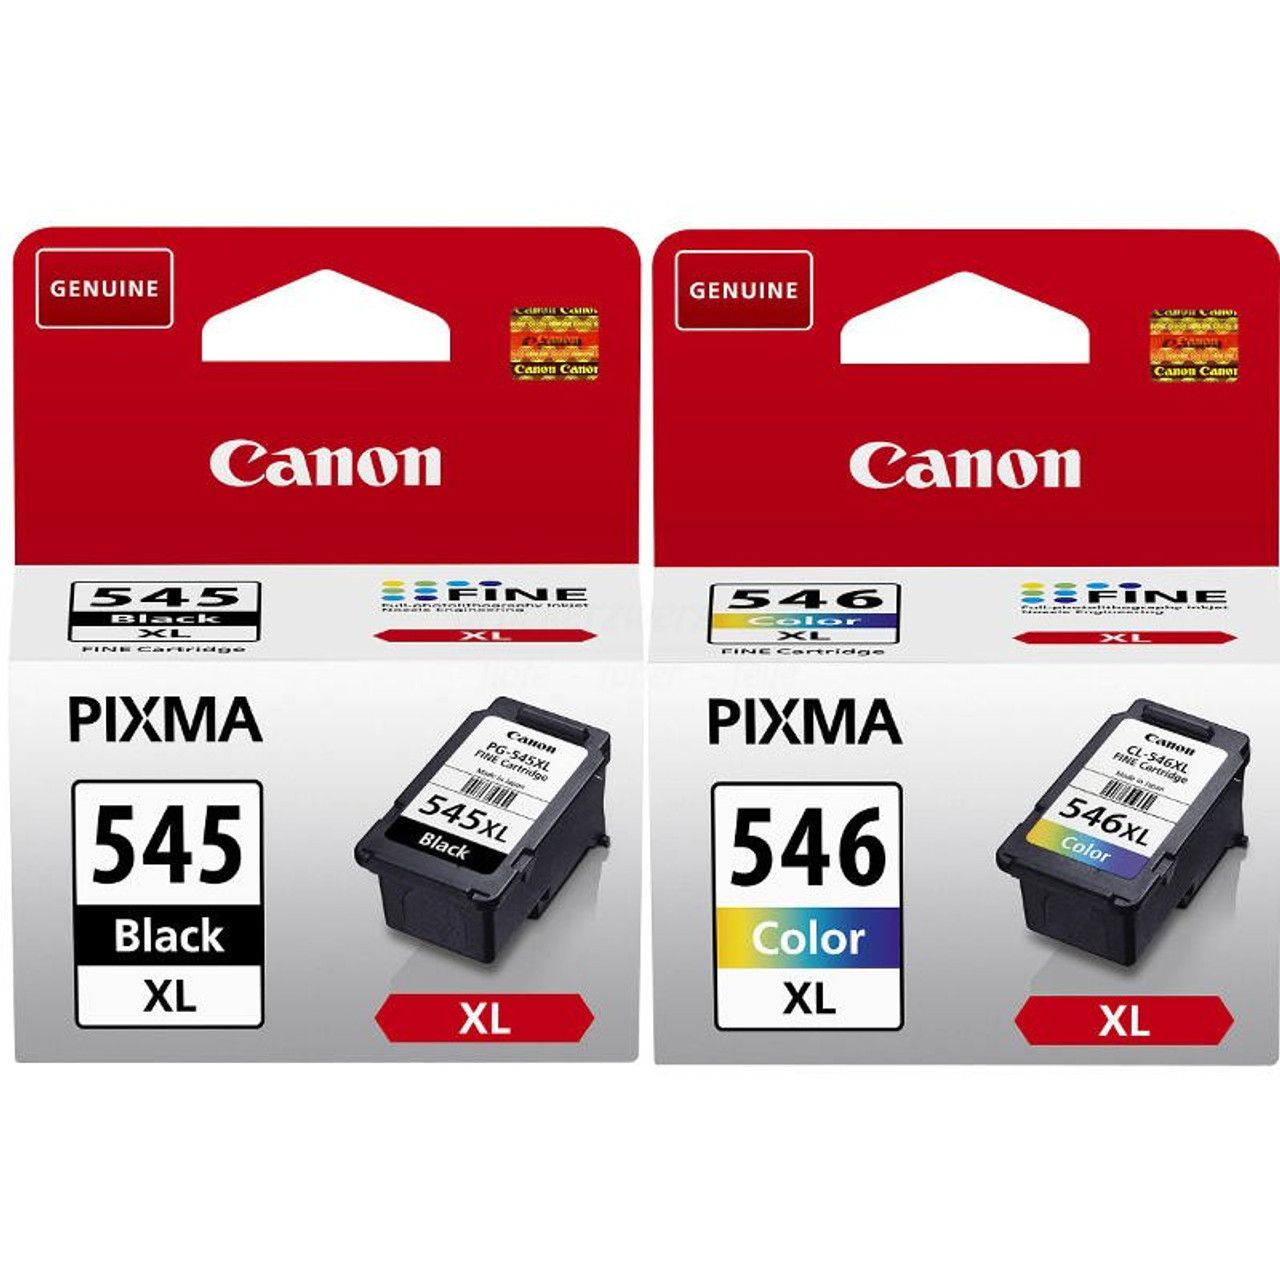 Canon Pixma MG2550S Ink Cartridges - Black & Colour - Original NEW